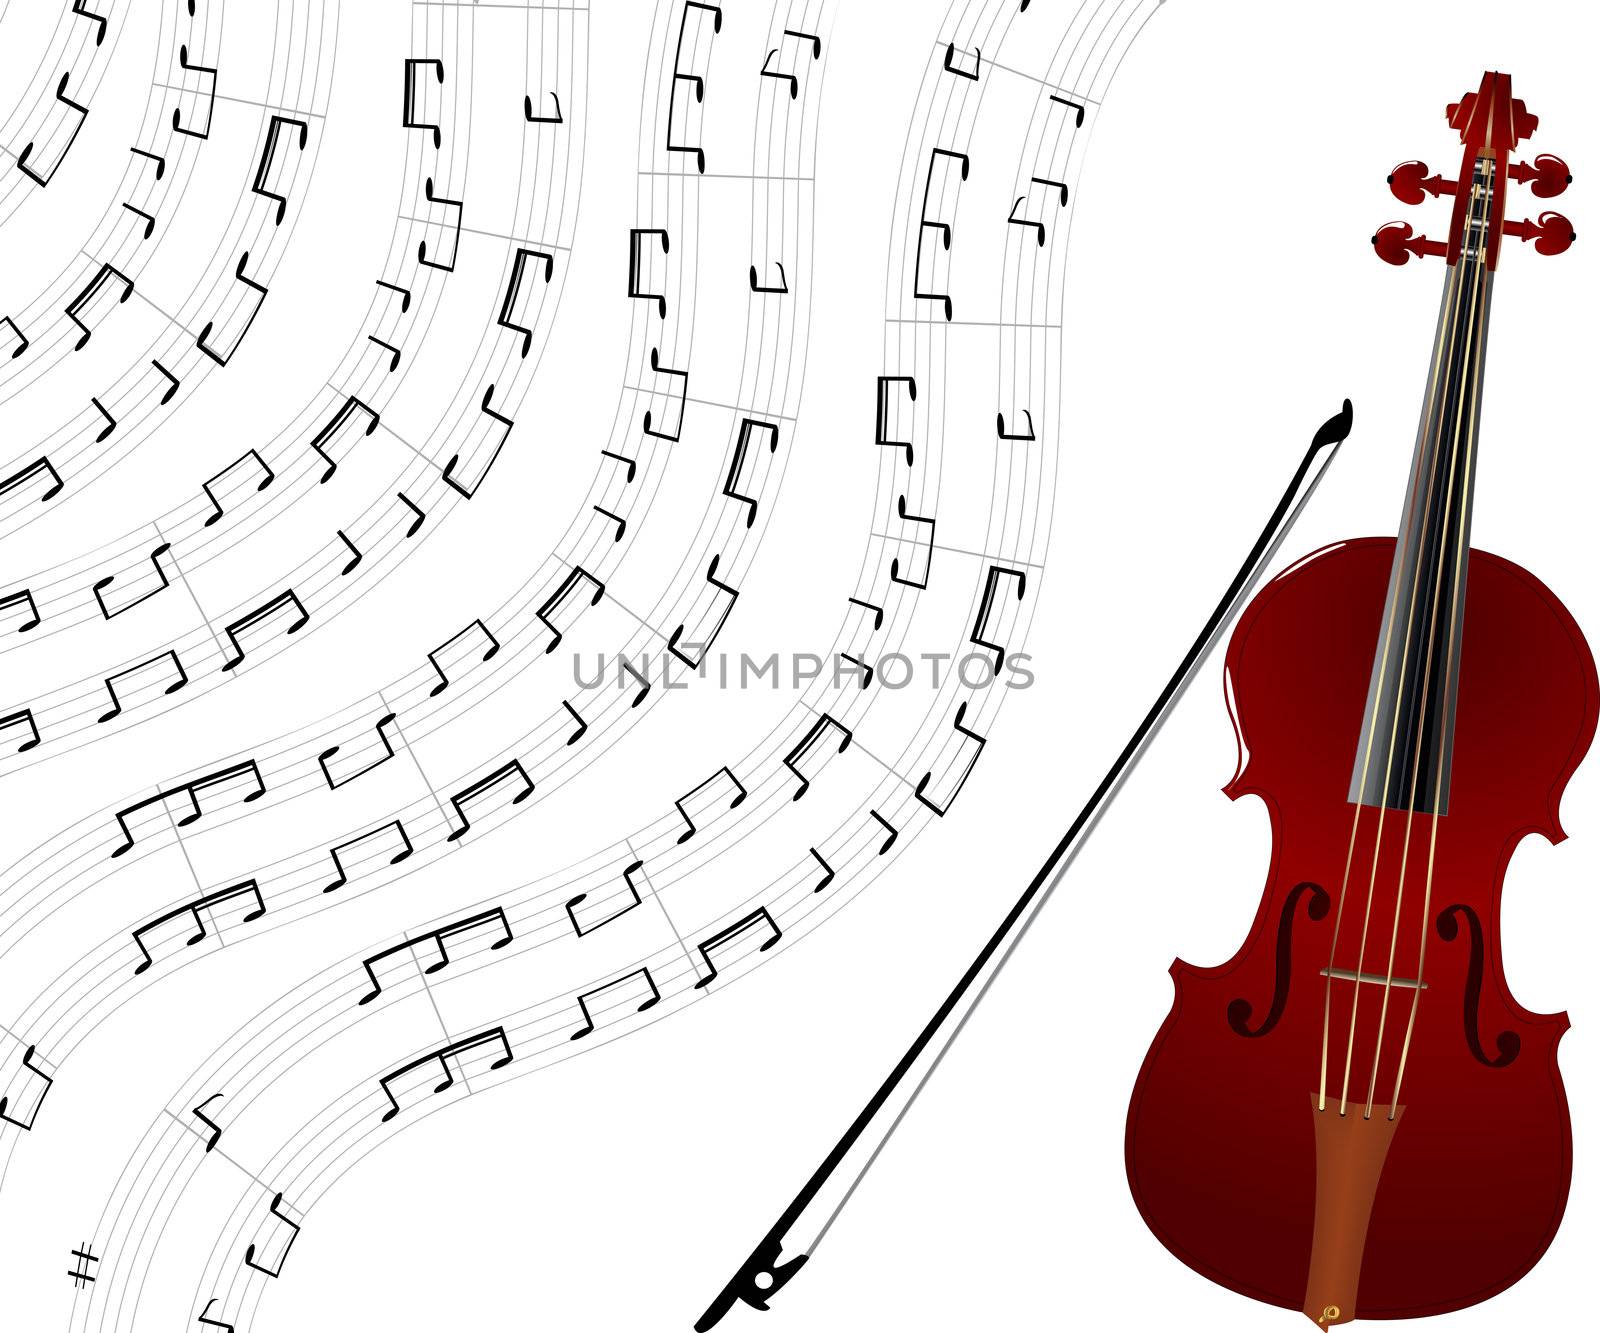 Violin background by Lirch